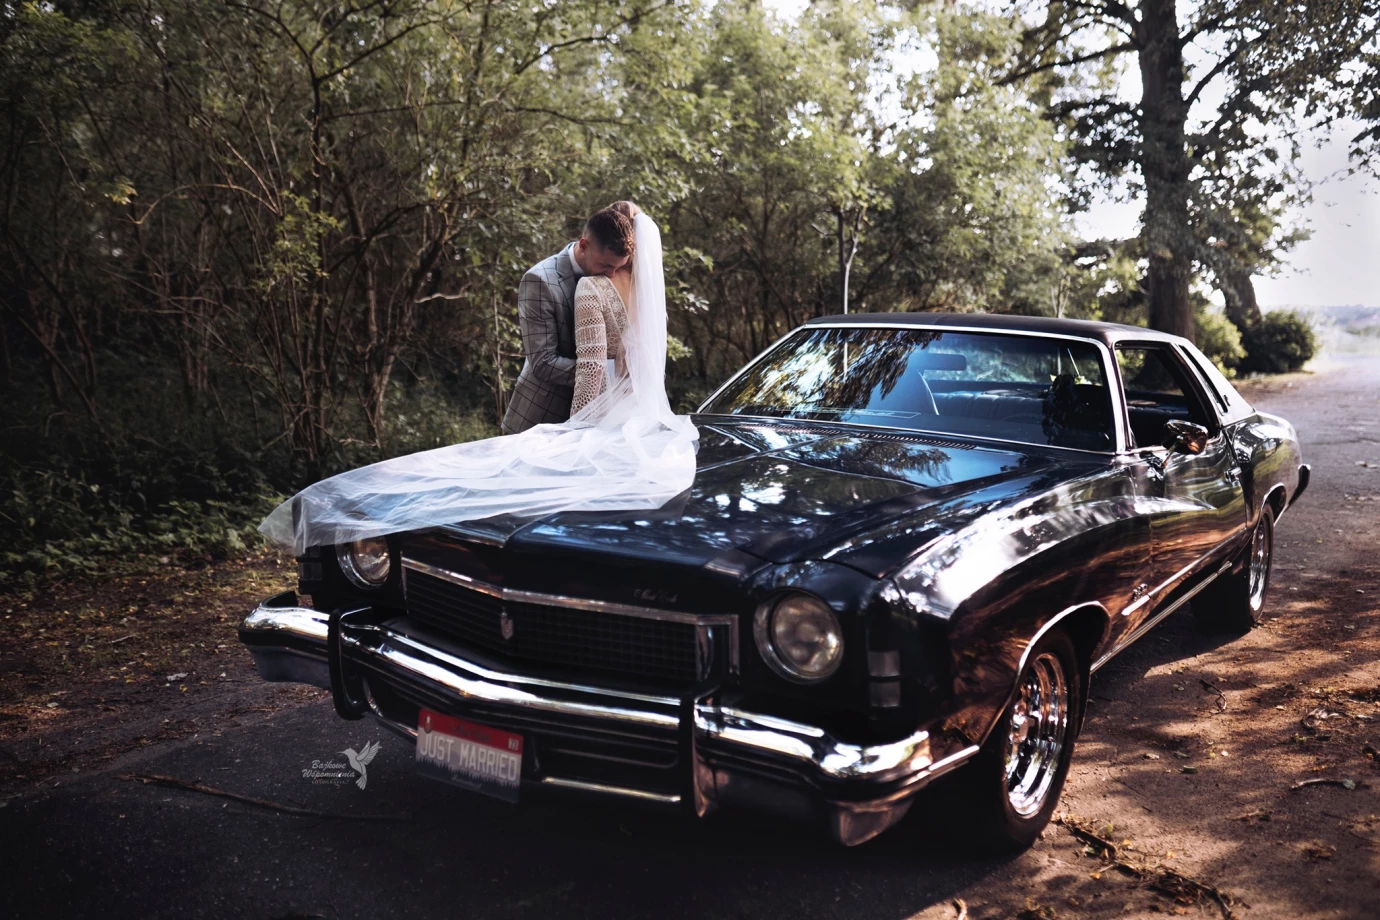 fotograf poznan alicja-wardak portfolio zdjecia slubne inspiracje wesele plener slubny sesja slubna